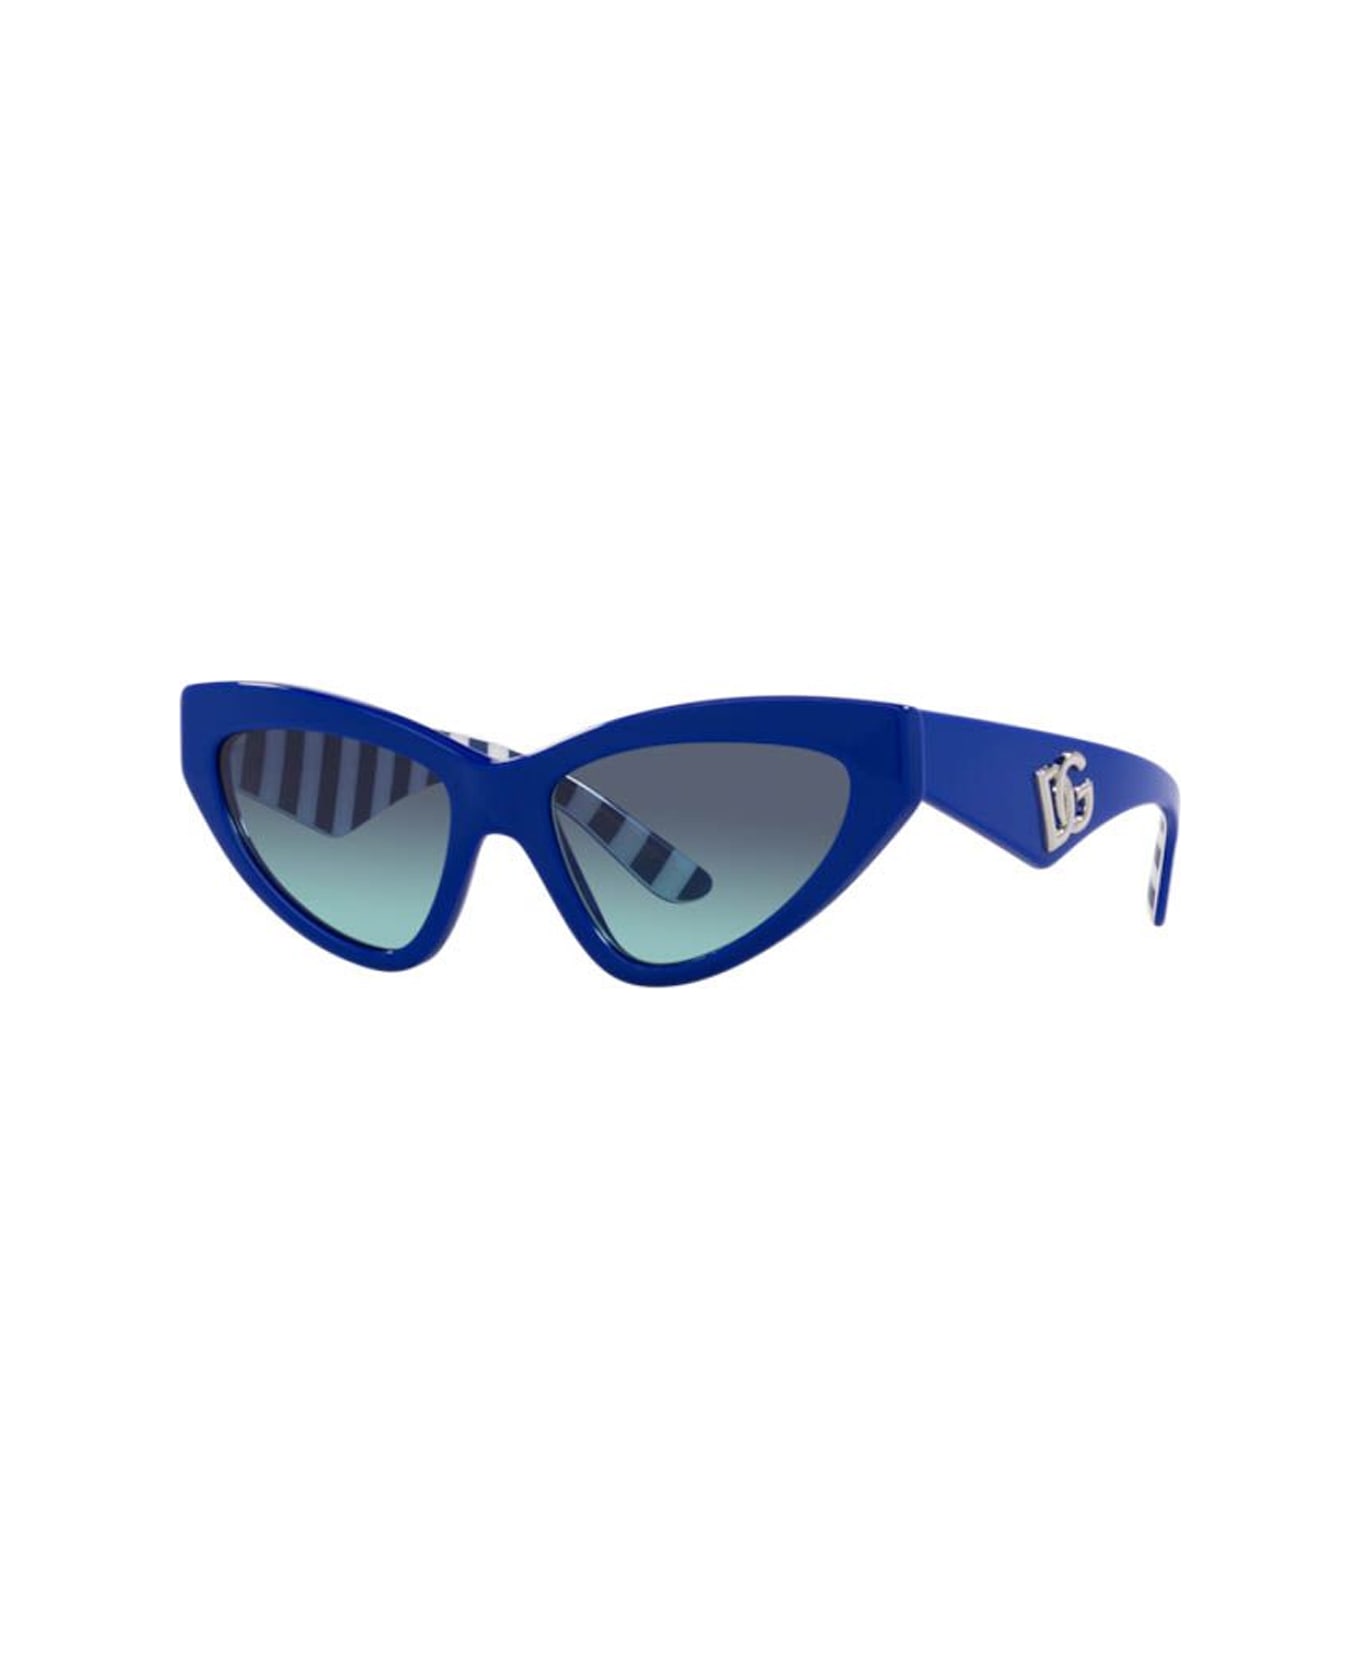 Dolce & Gabbana Eyewear Dg4439 311945 Sunglasses - Blu サングラス